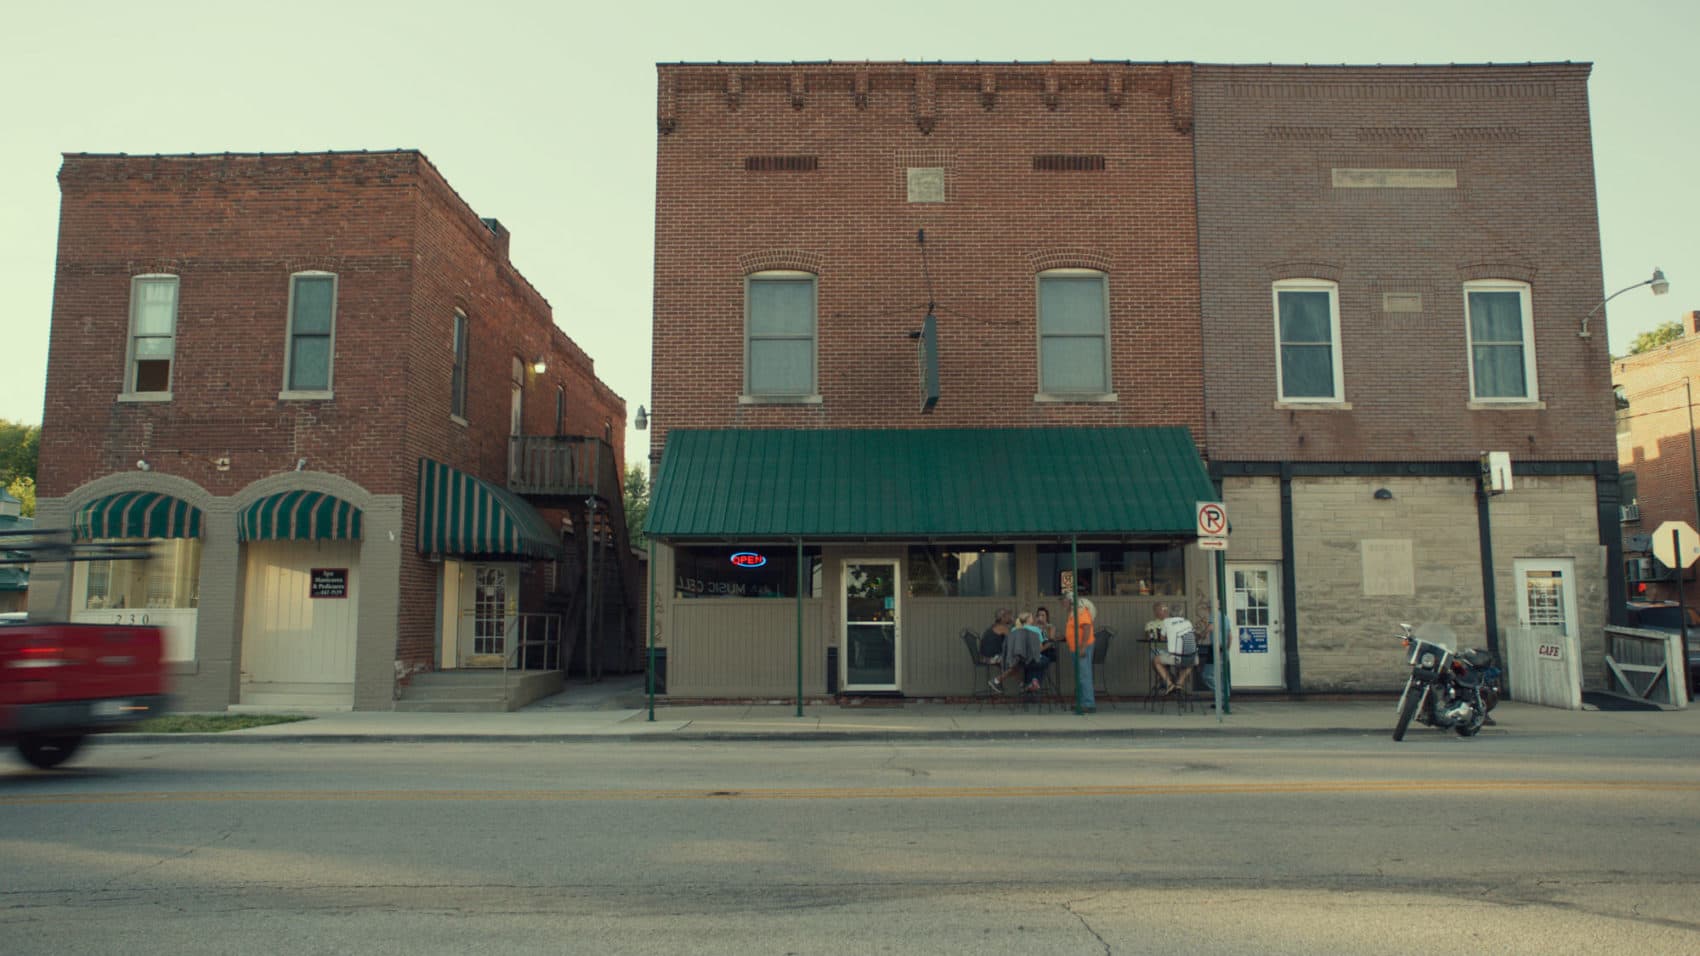 A storefront on Main Street in Monrovia, Indiana. (Courtesy Zipporah Films)